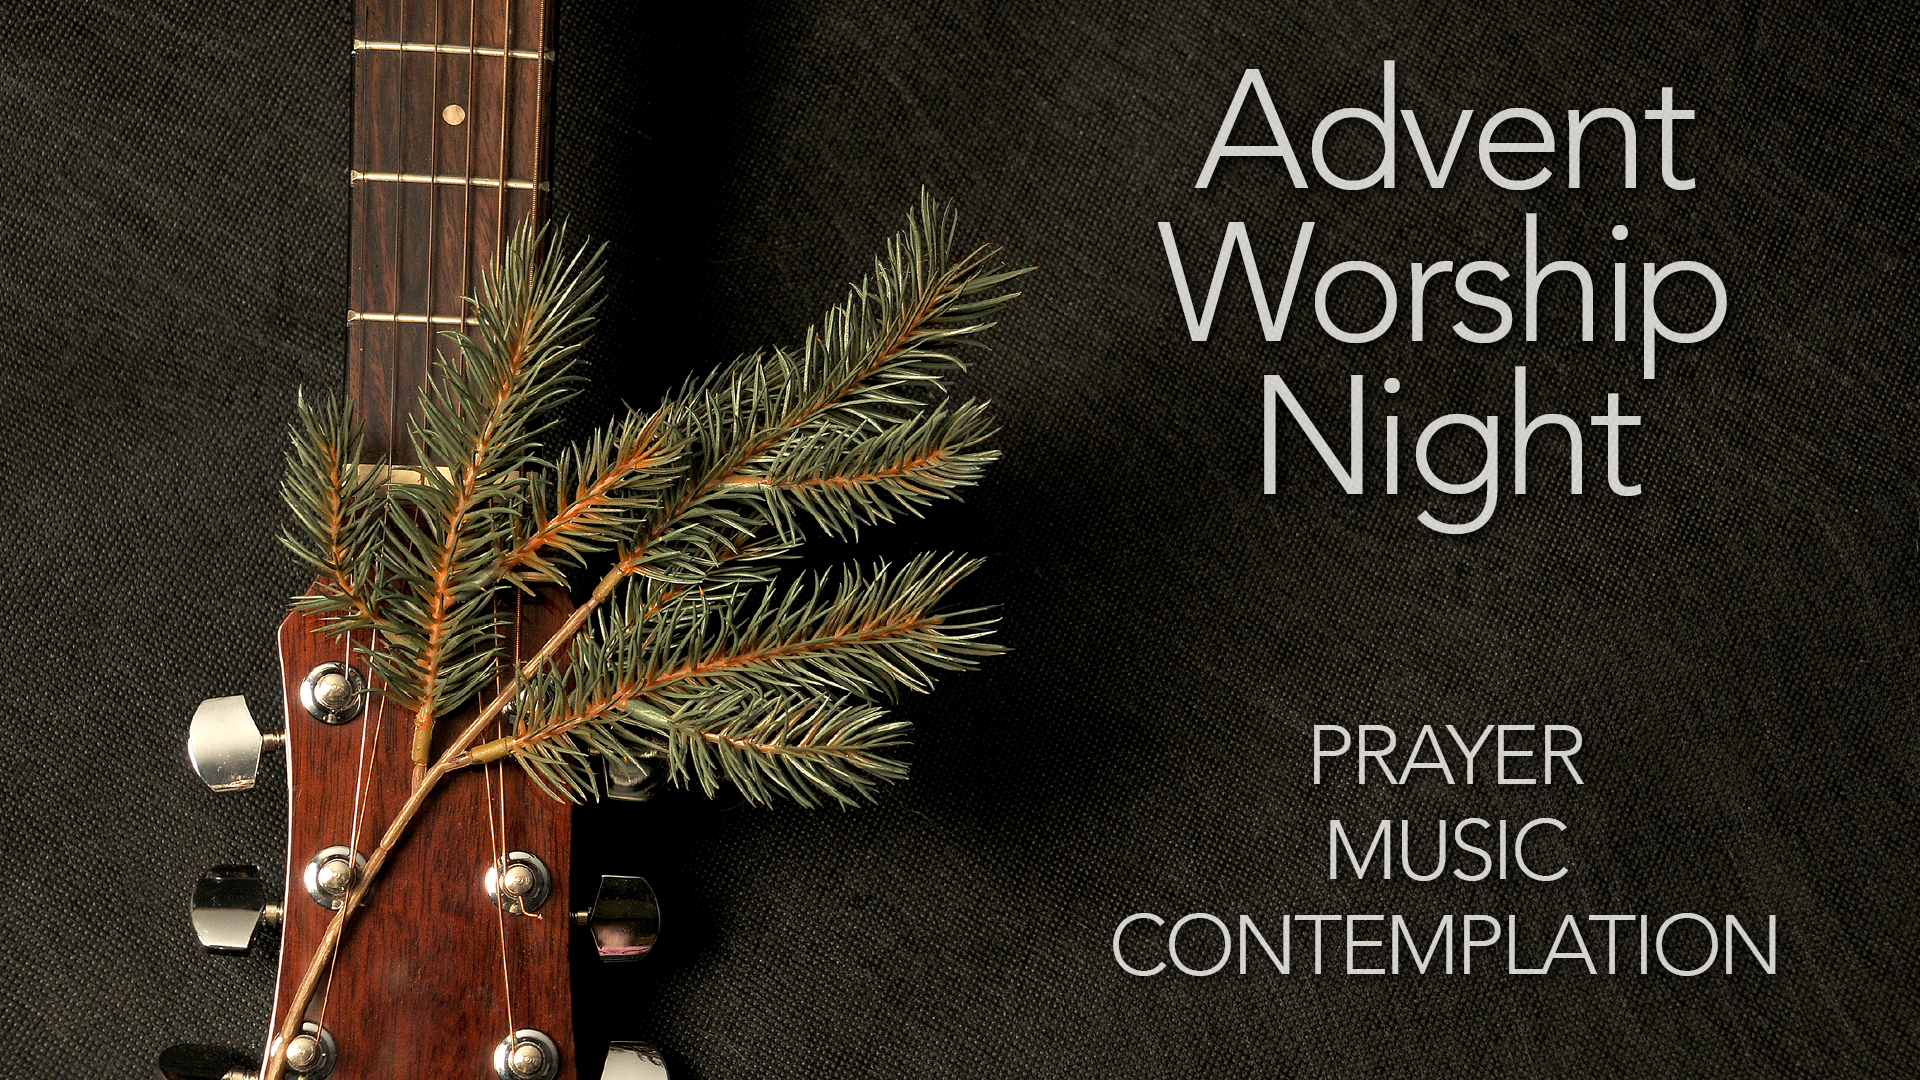 Advent Worship Night
Saturday, December 9 | 5:00 pm
Fellowship Hall
